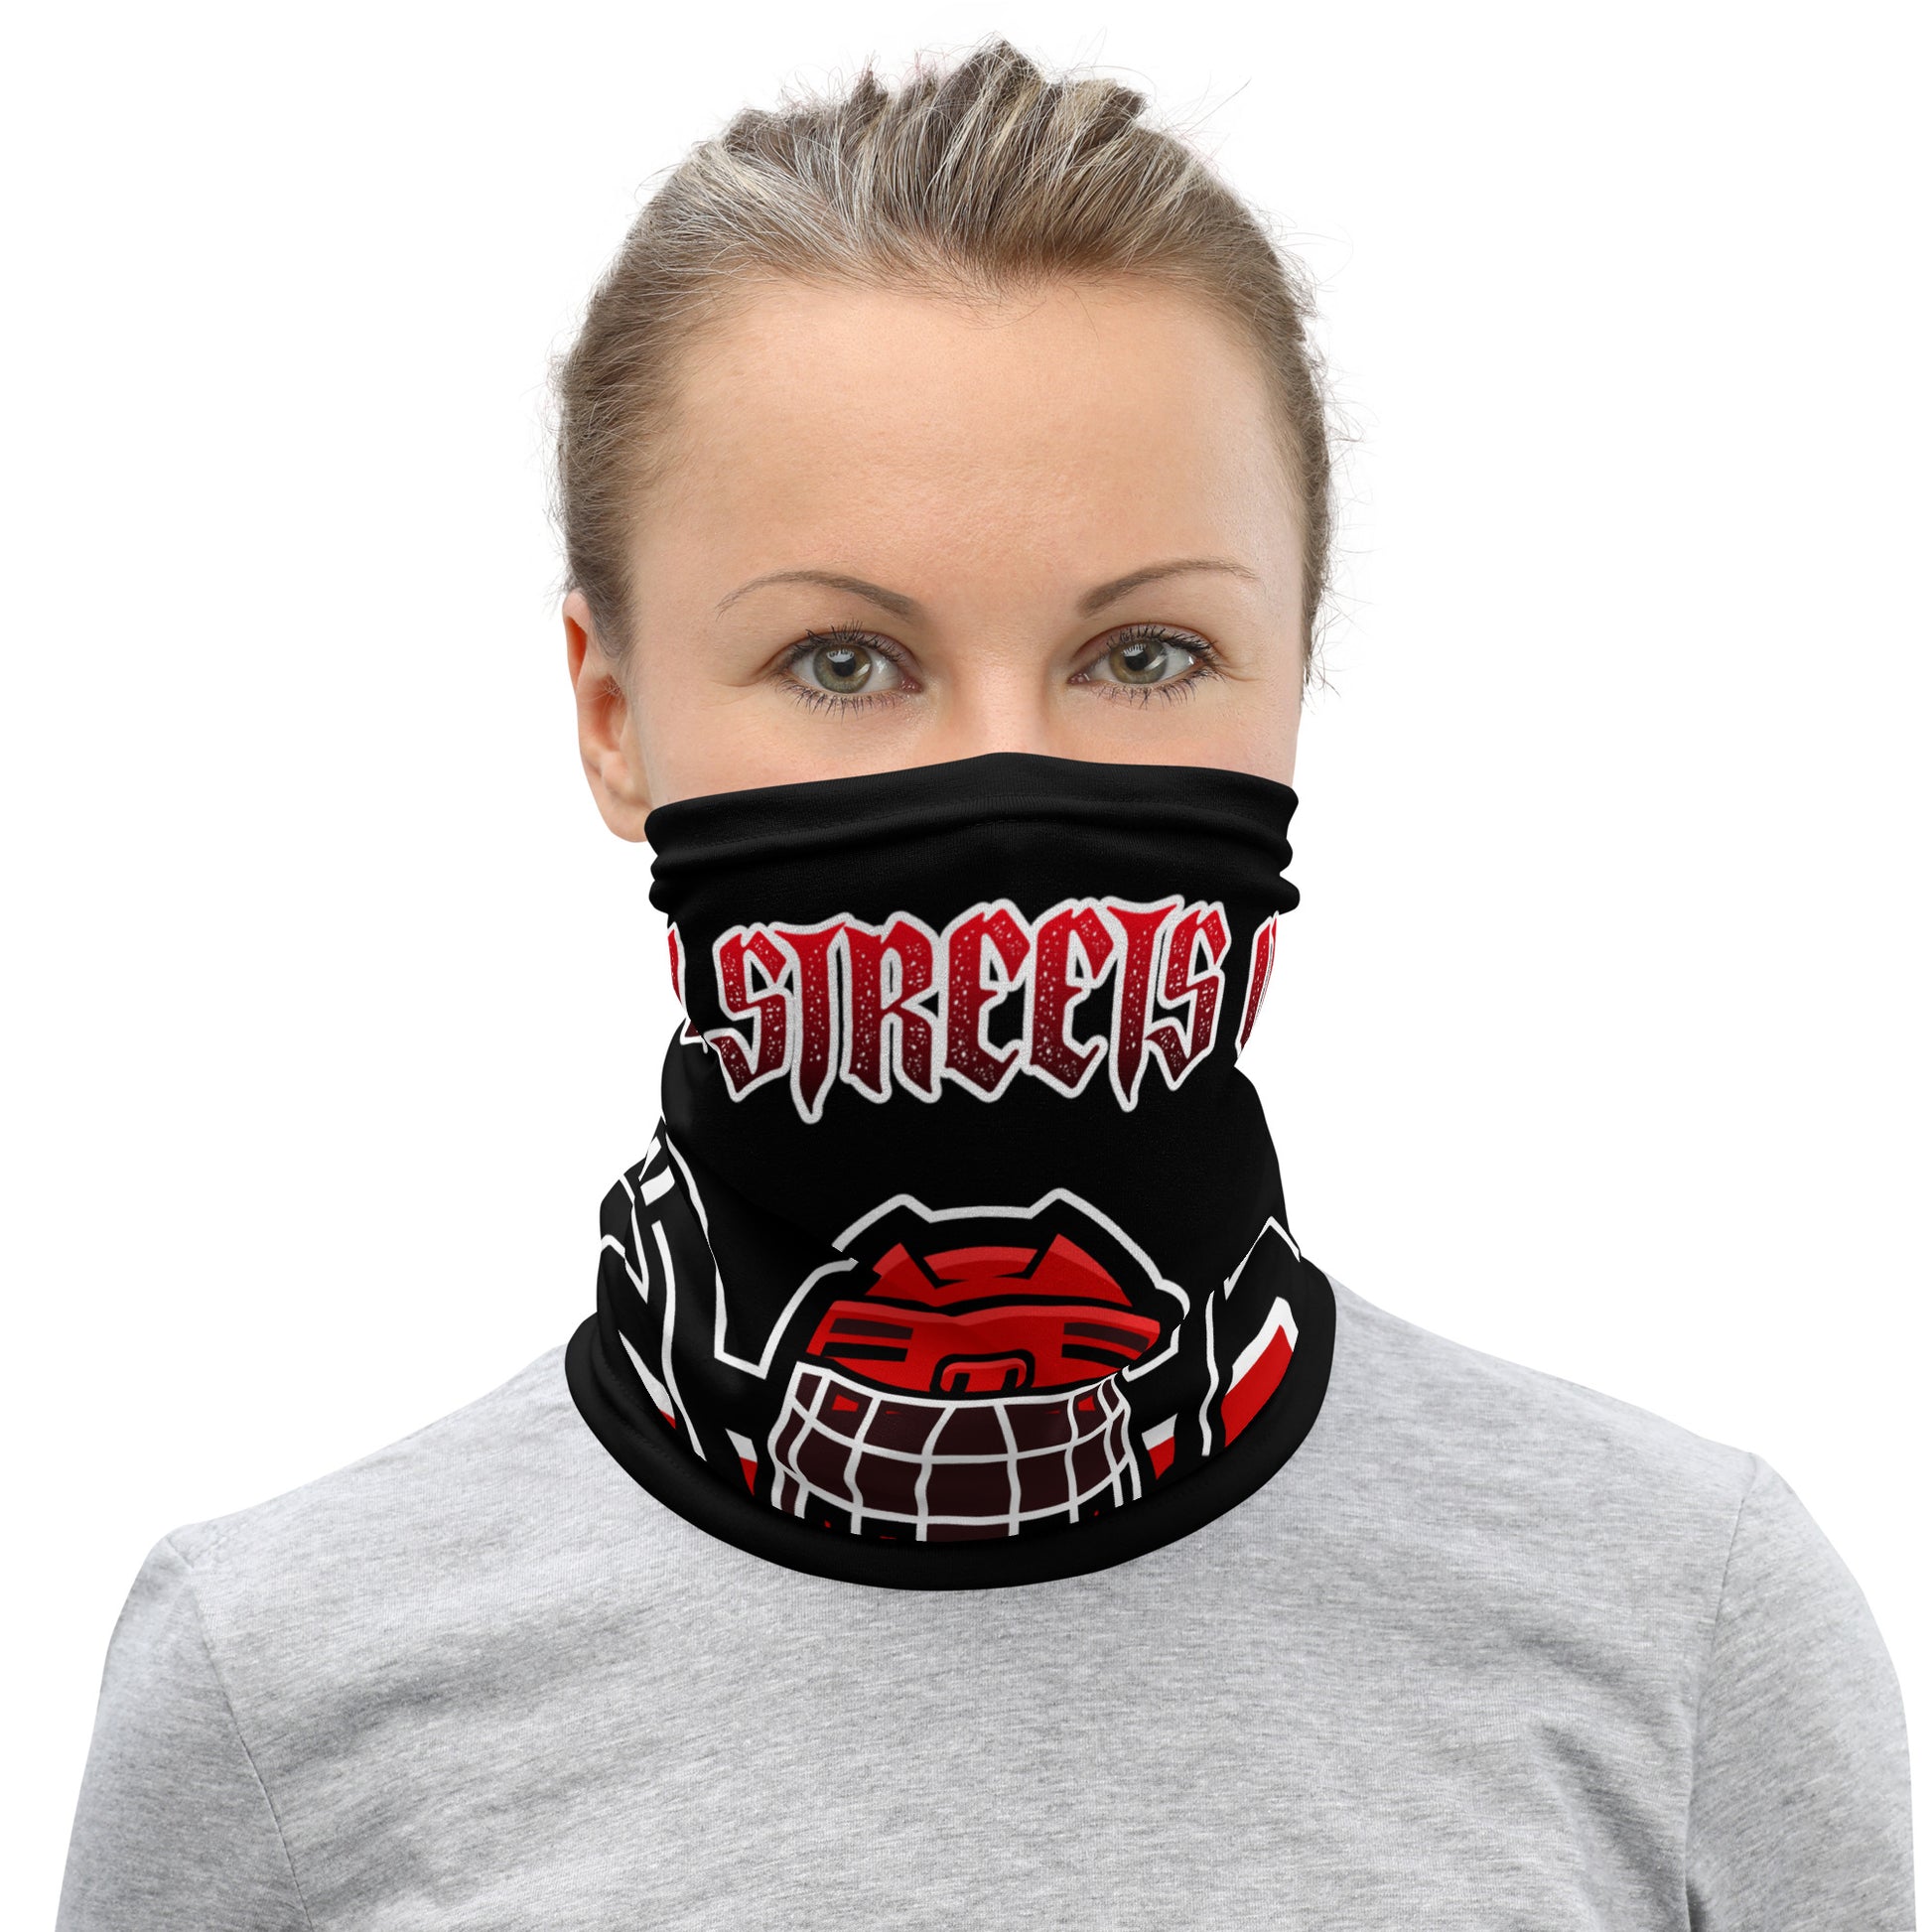 Bloody Streets Hockey Maske - Multifunktionstuch - BLOODY-STREETS.DE Streetwear Herren und Damen Hoodies, T-Shirts, Pullis